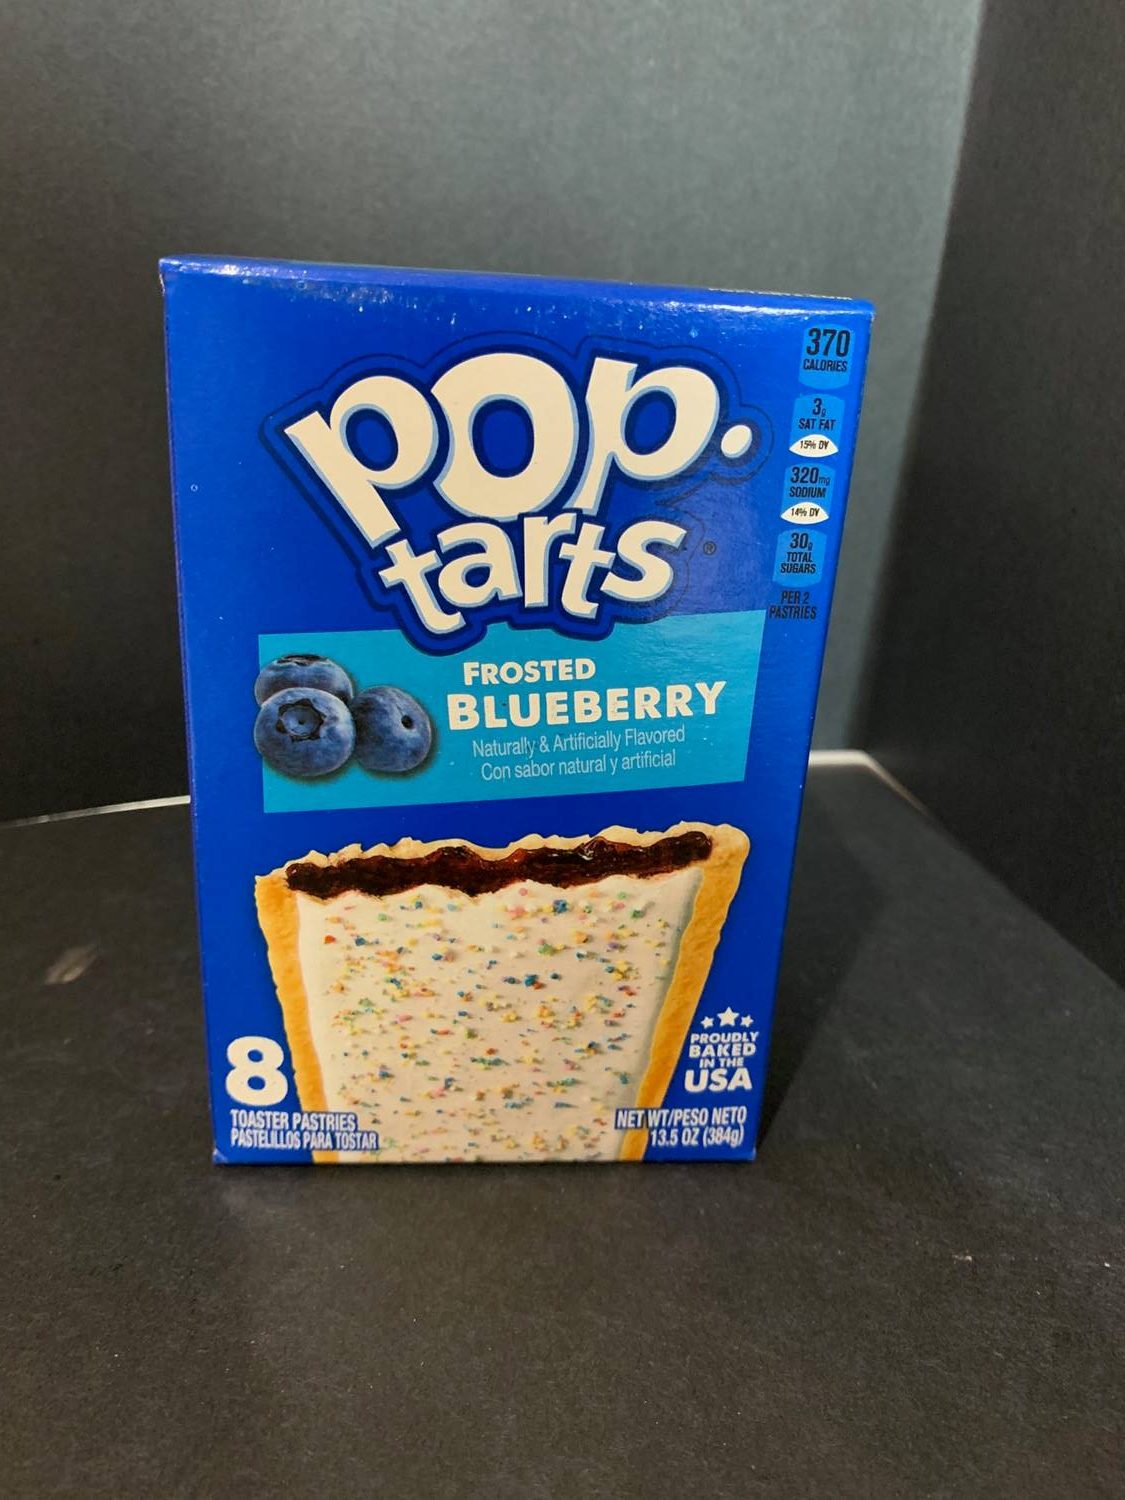 Pop tarts-Blueberry